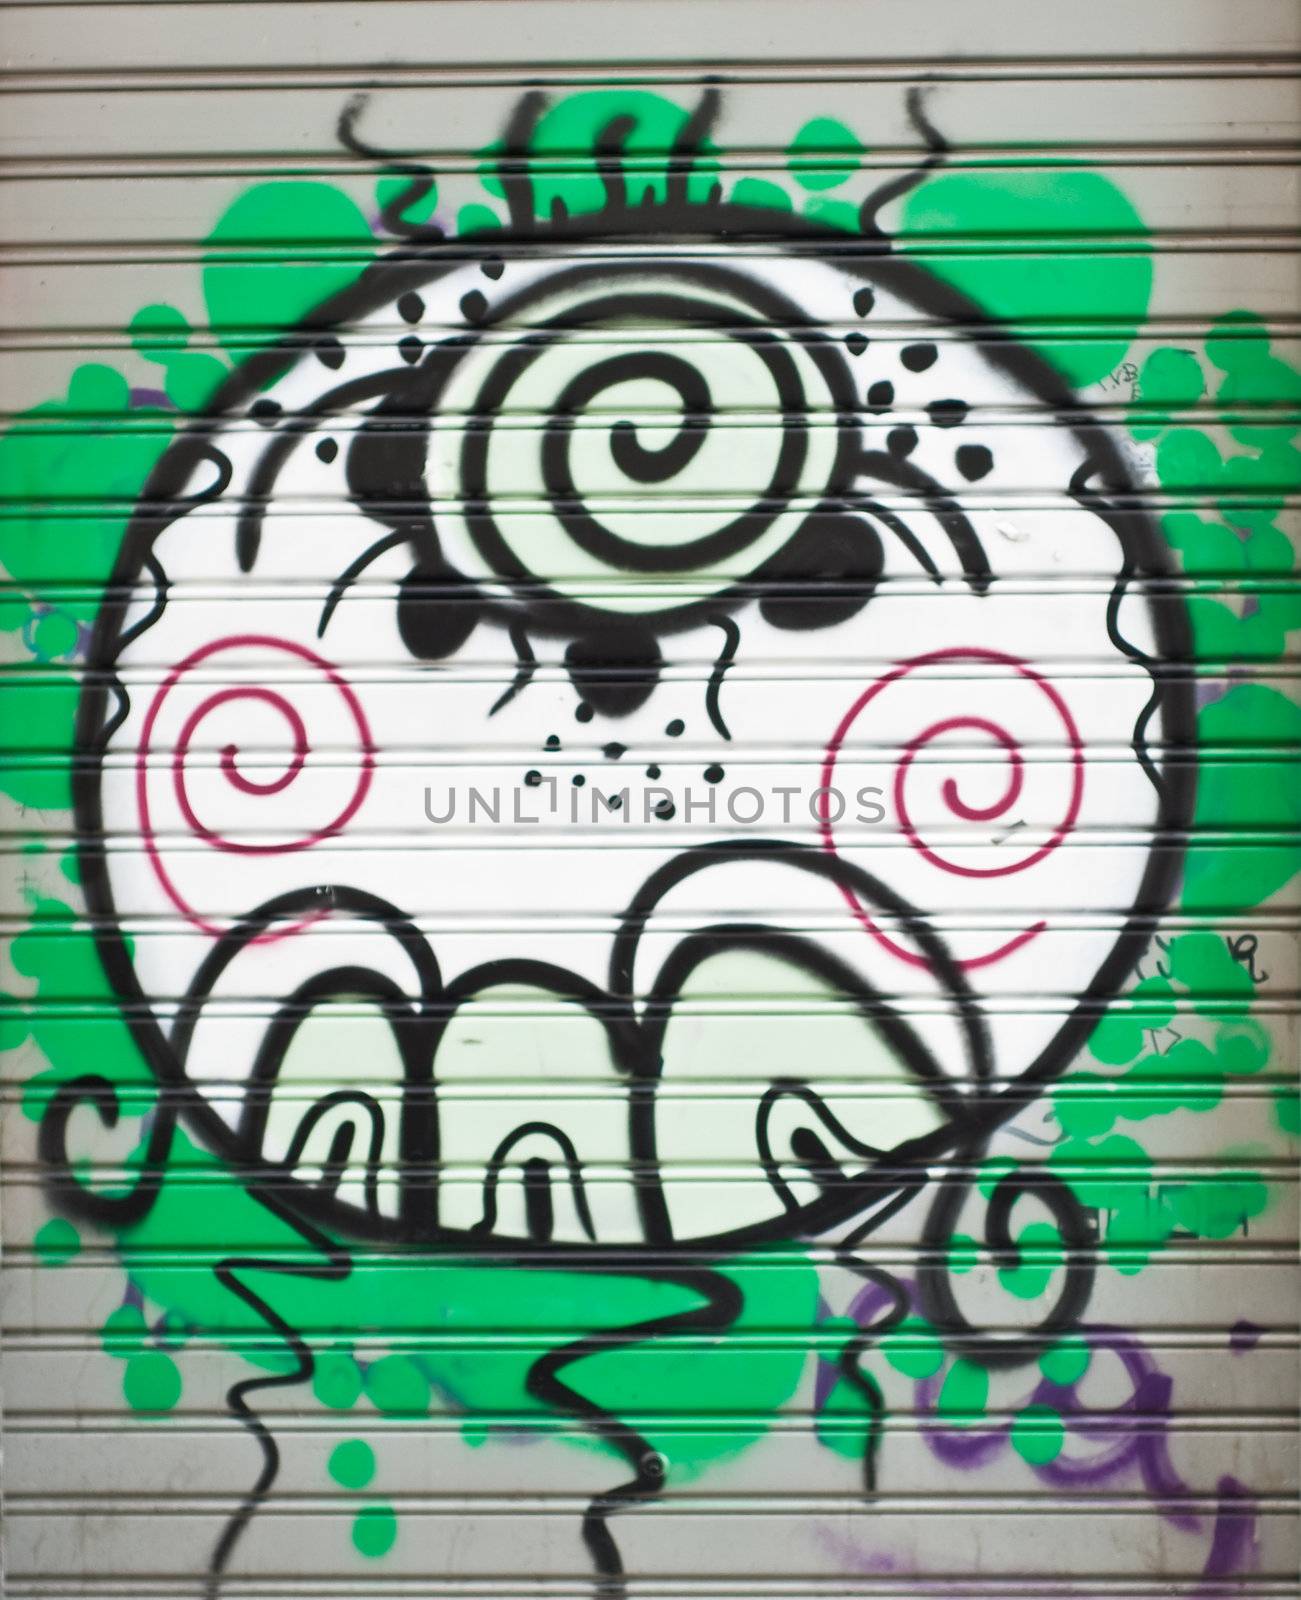 graffiti on the wall by geko103